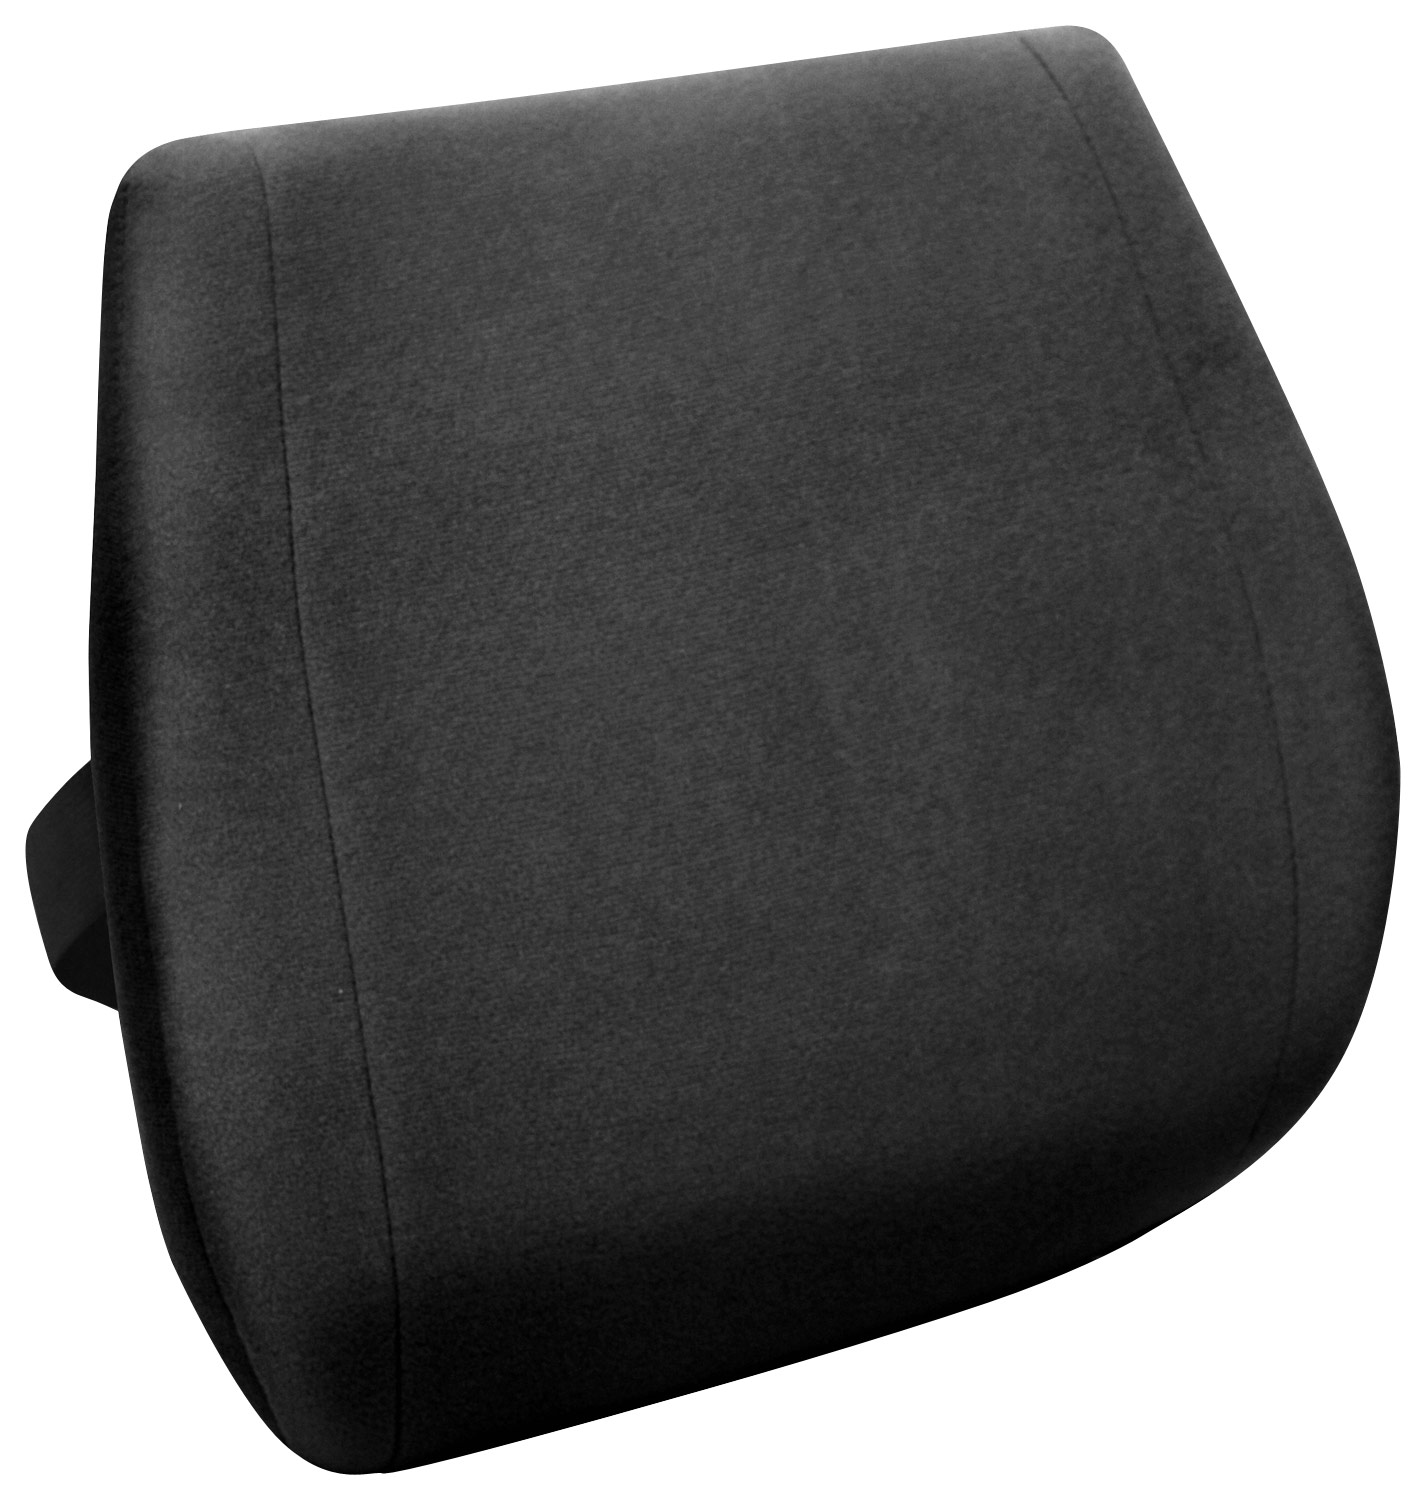  Comfort Products Inc. - Lumbar Massage Cushion with Heat - Black